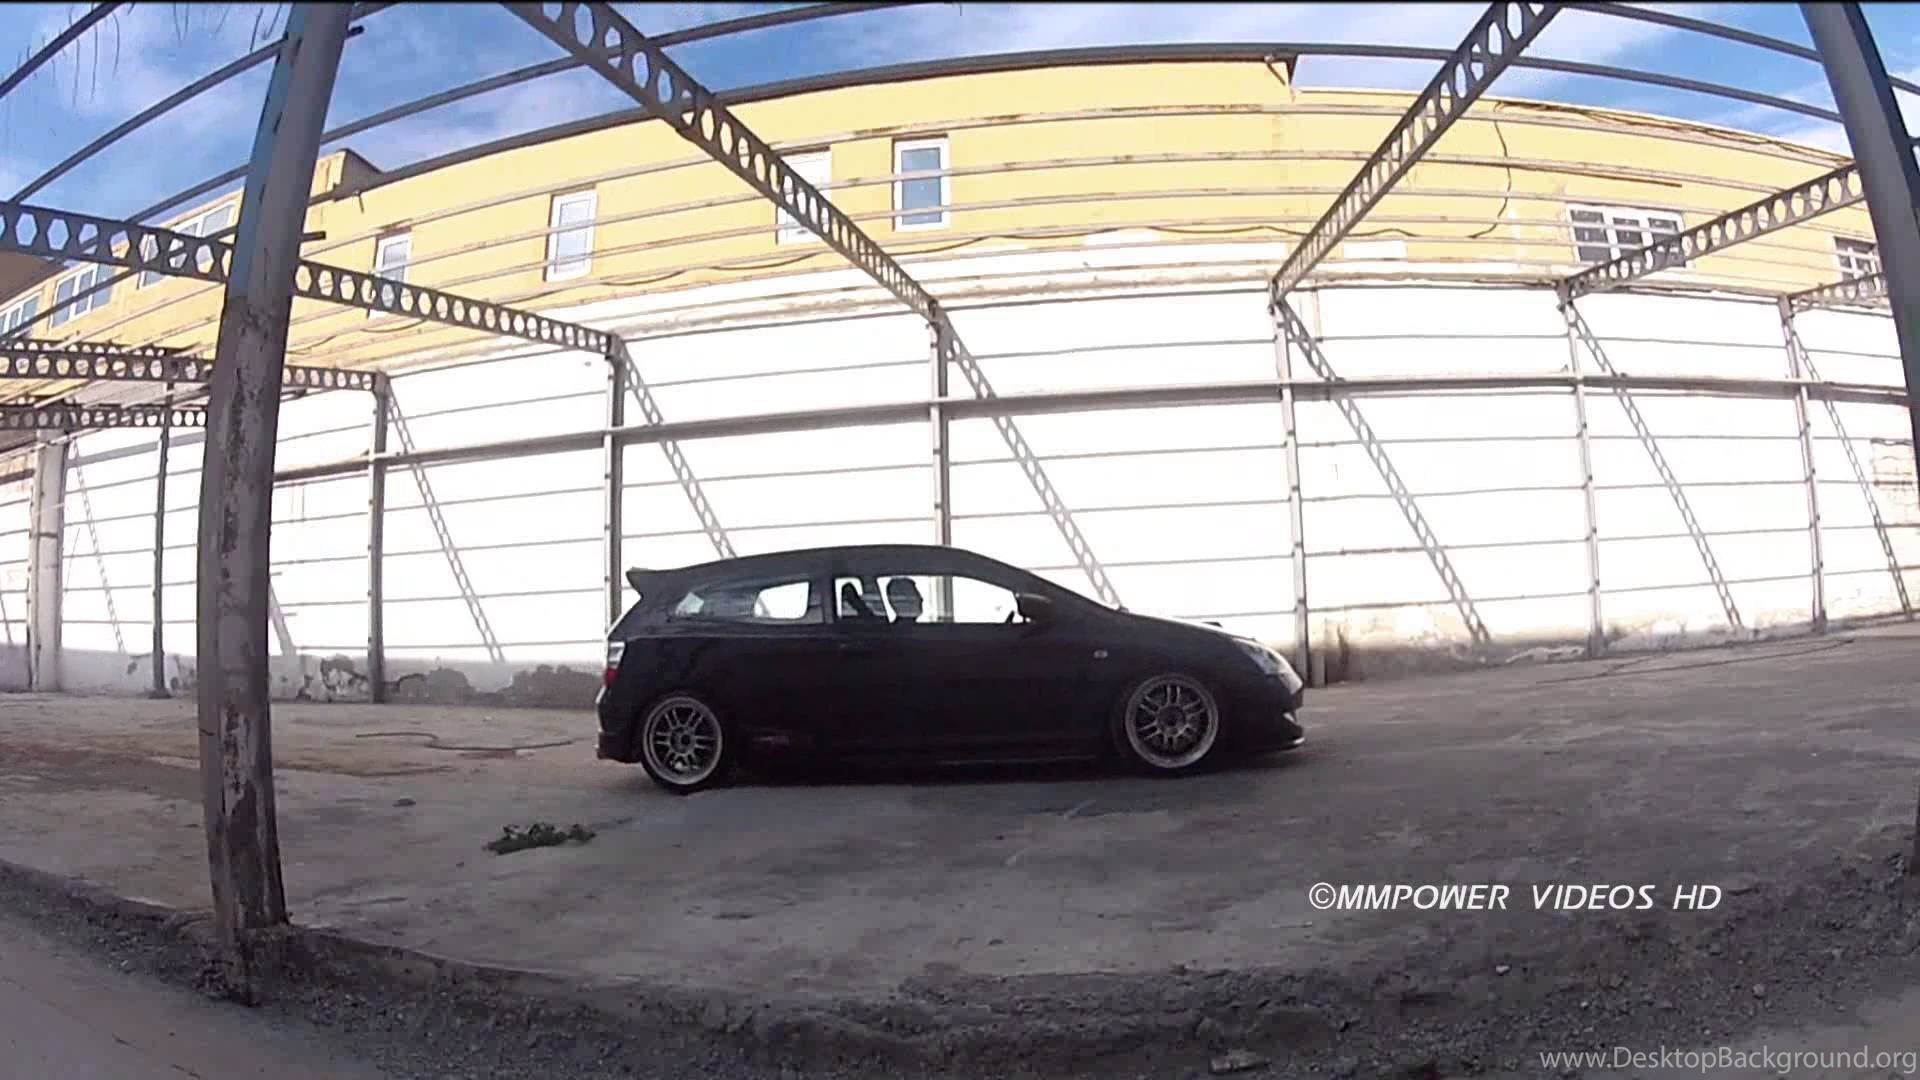 MMPower Honda Civic EP3 TypeR (Black) Project Video ᴴᴰ YouTube Desktop Background